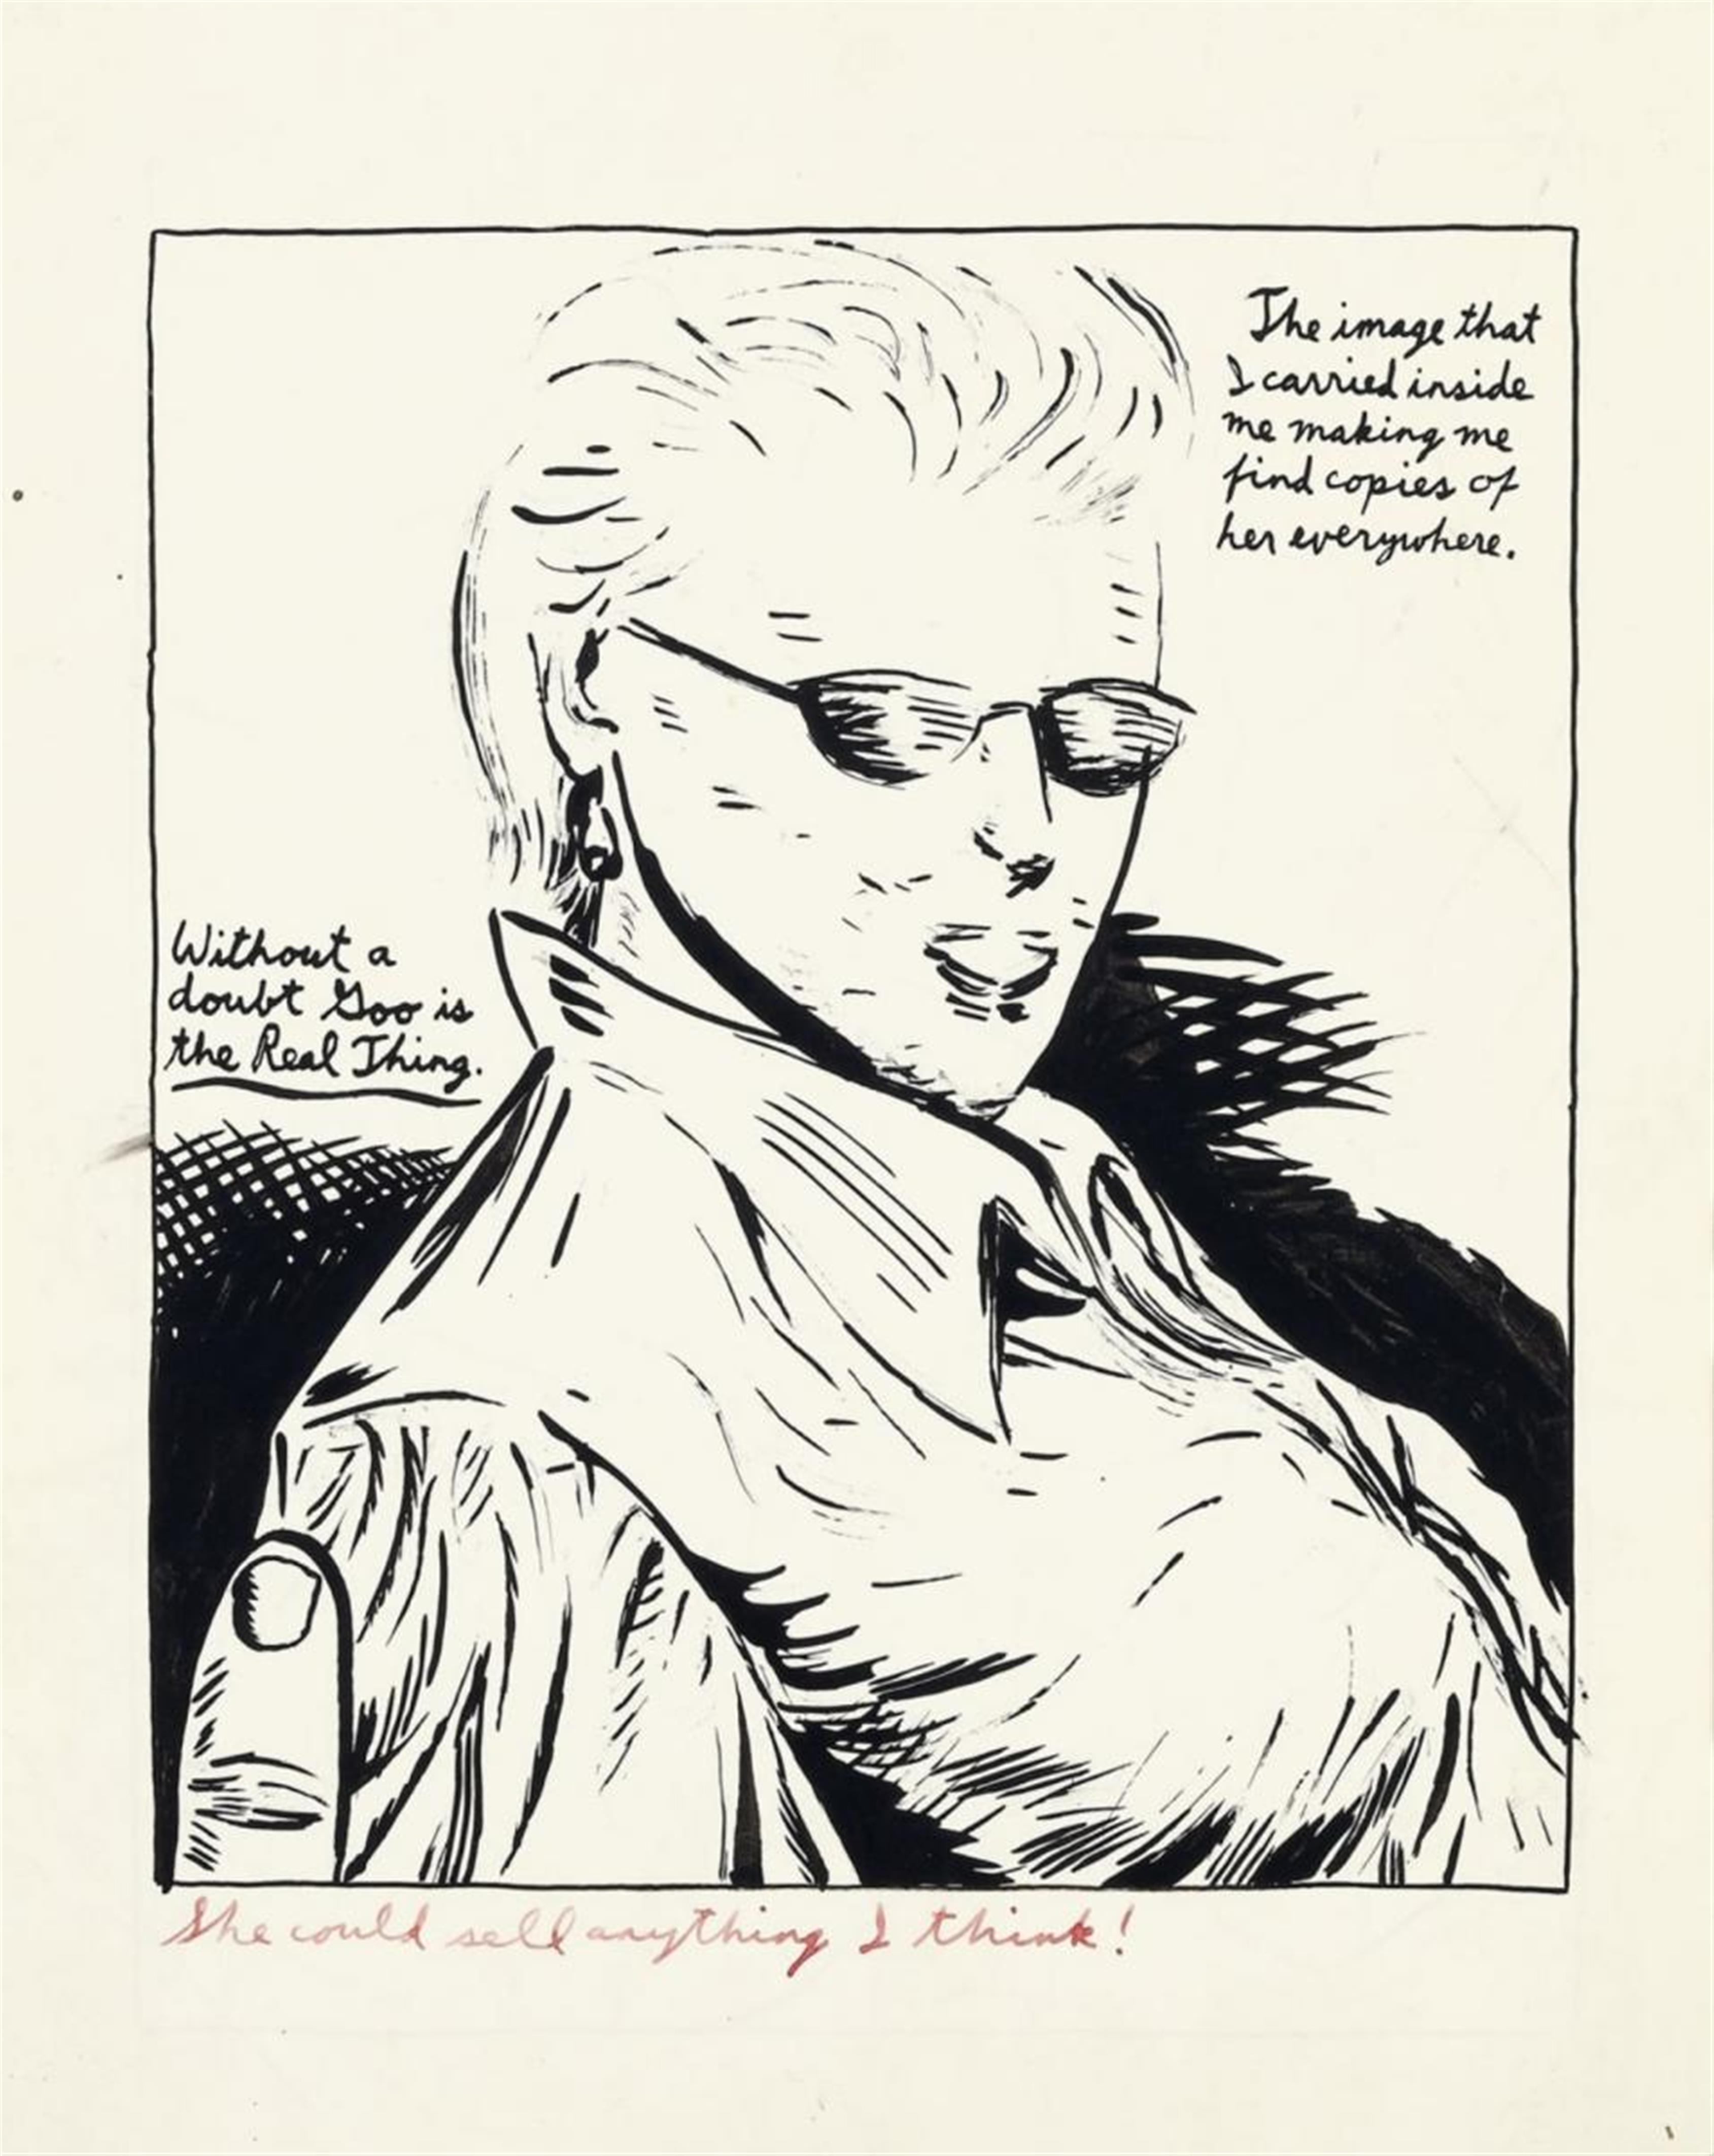 Raymond Pettibon - Untitled (She could sell anything I think!) - image-1